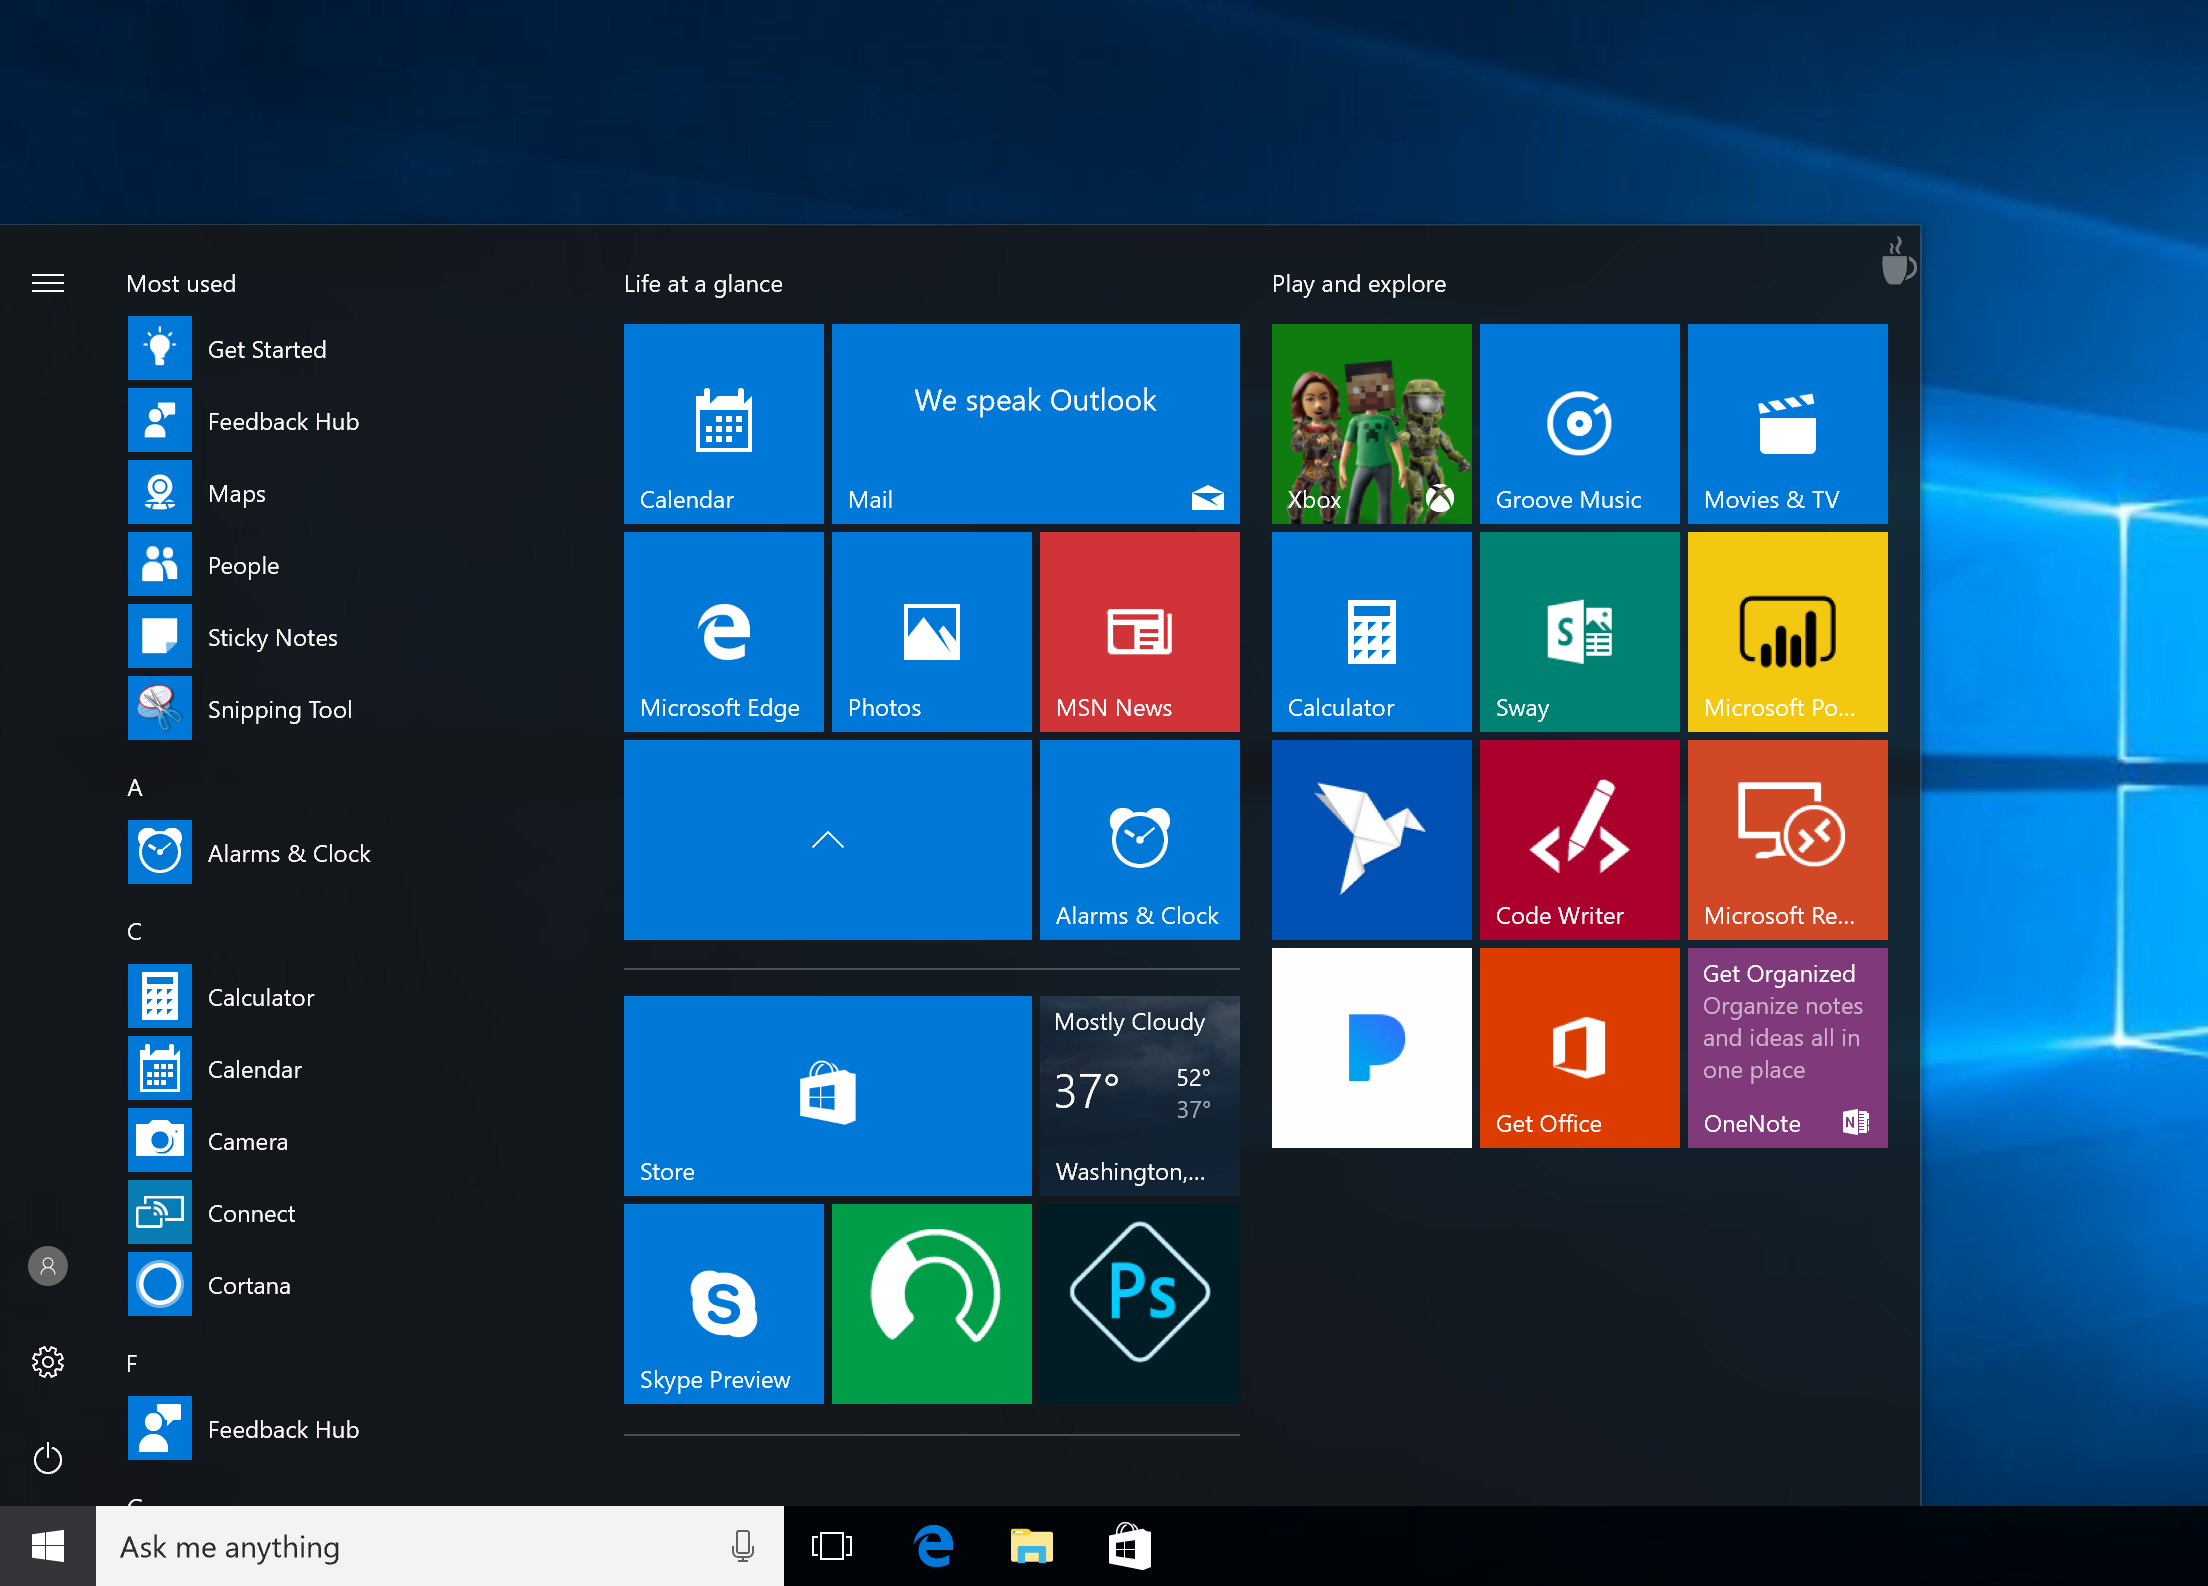 Windows 10 Creators Update will introduce app folders for the Start Menu on PCs